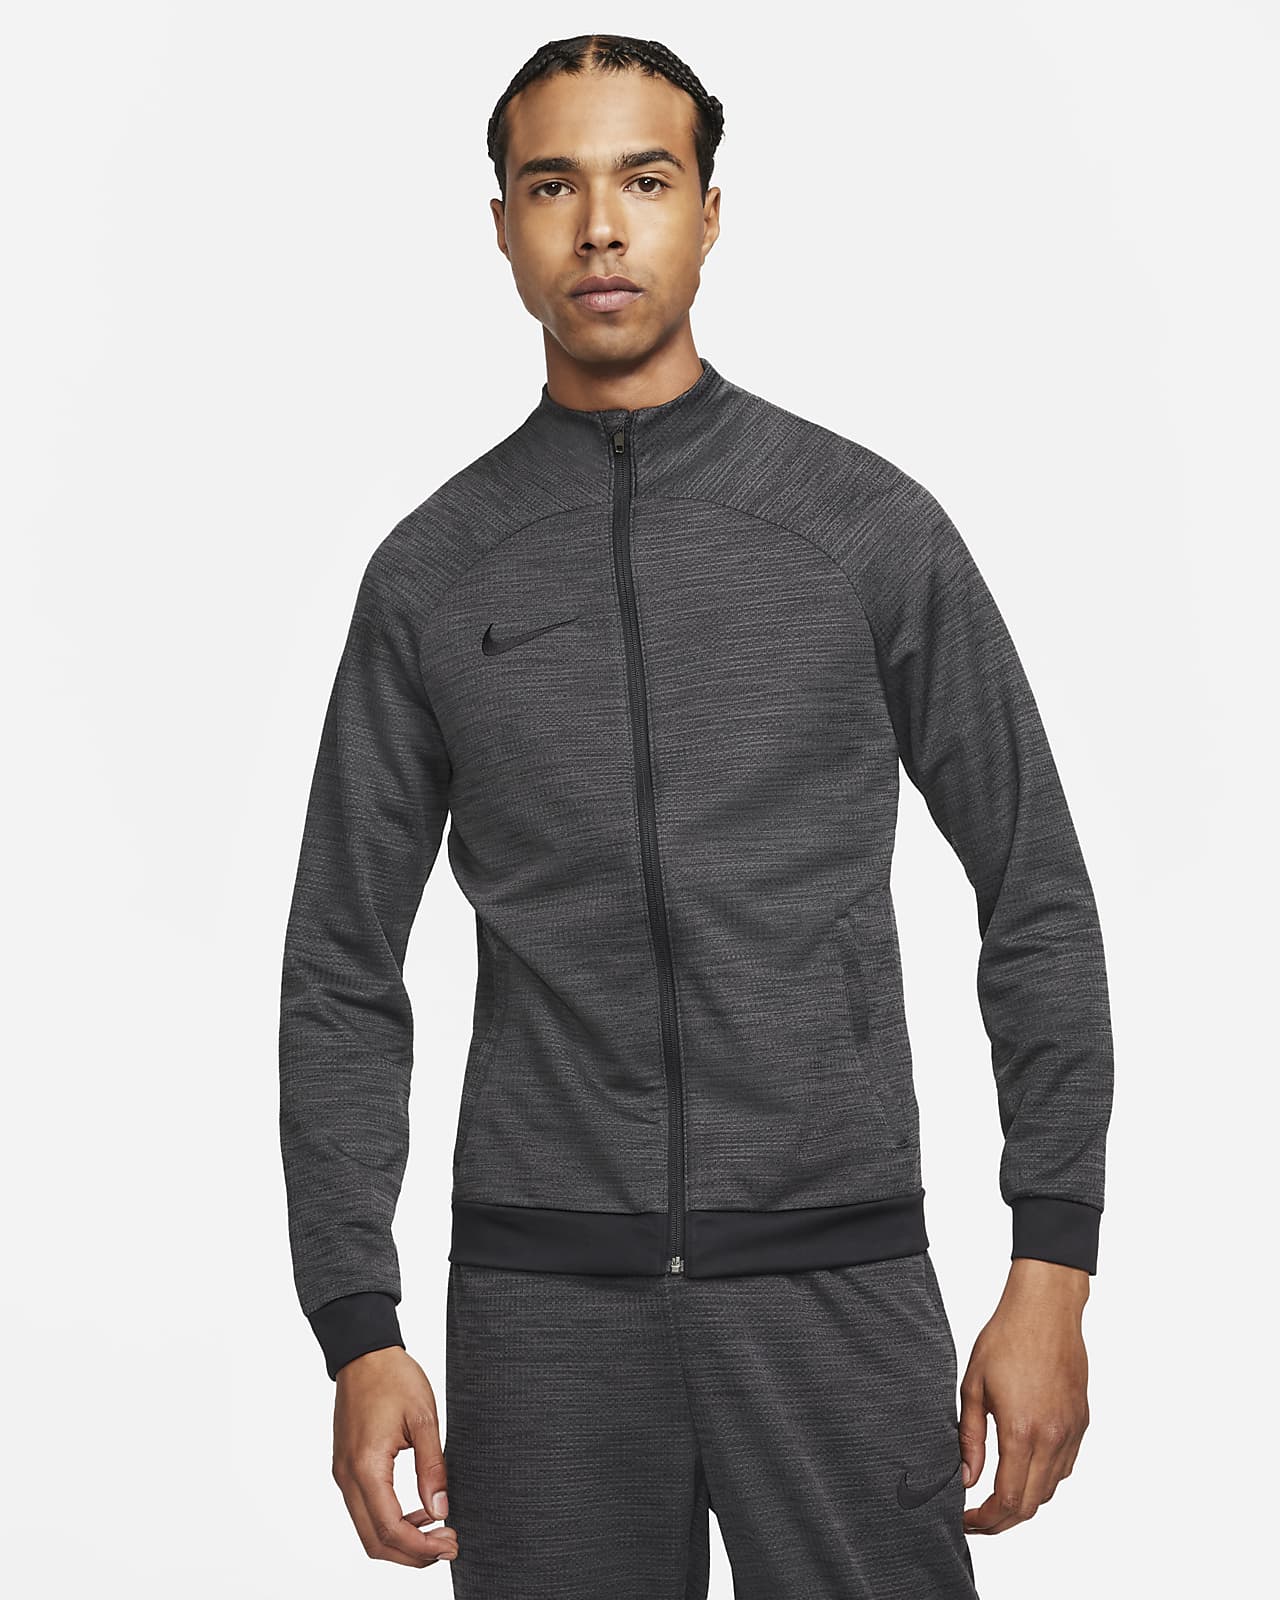 Nike Academy Men's Dri-FIT Soccer Jacket